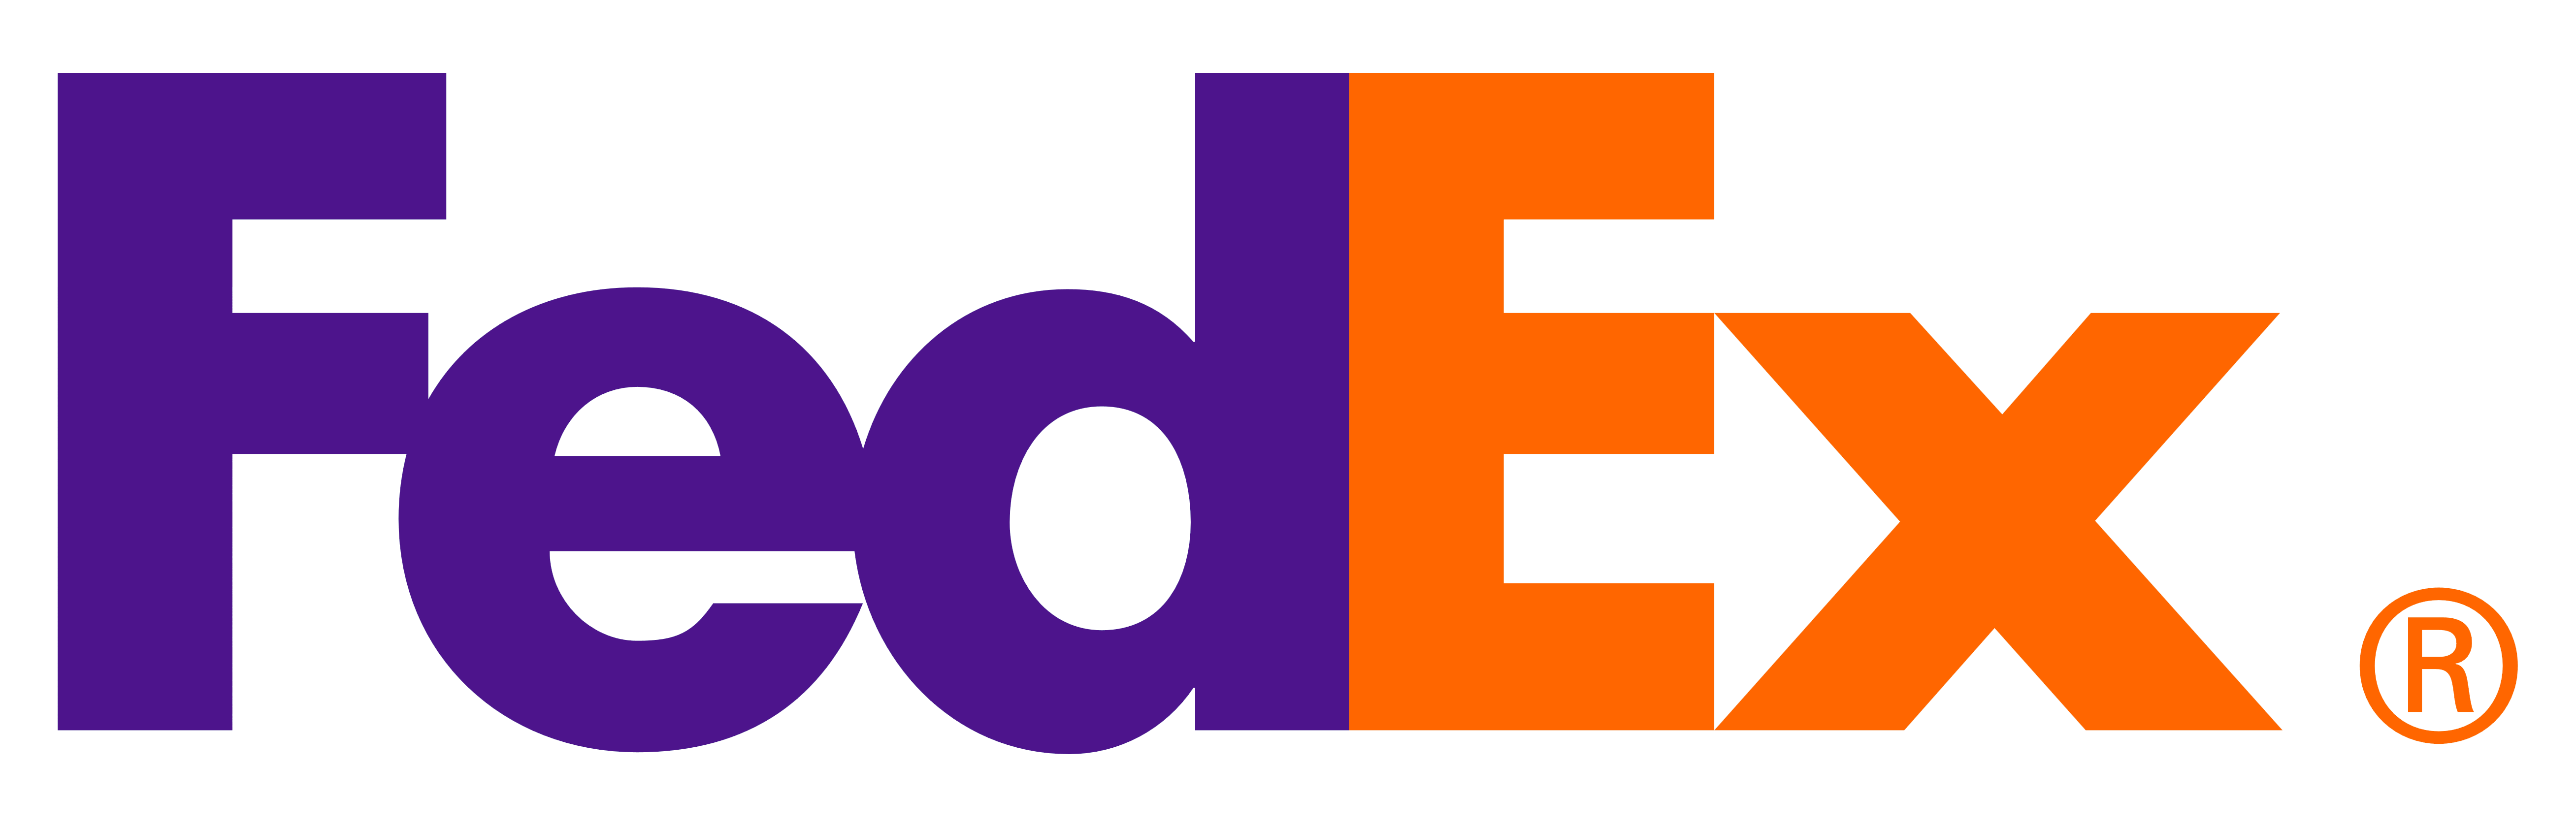 Empower Leadership Clients - FedEx